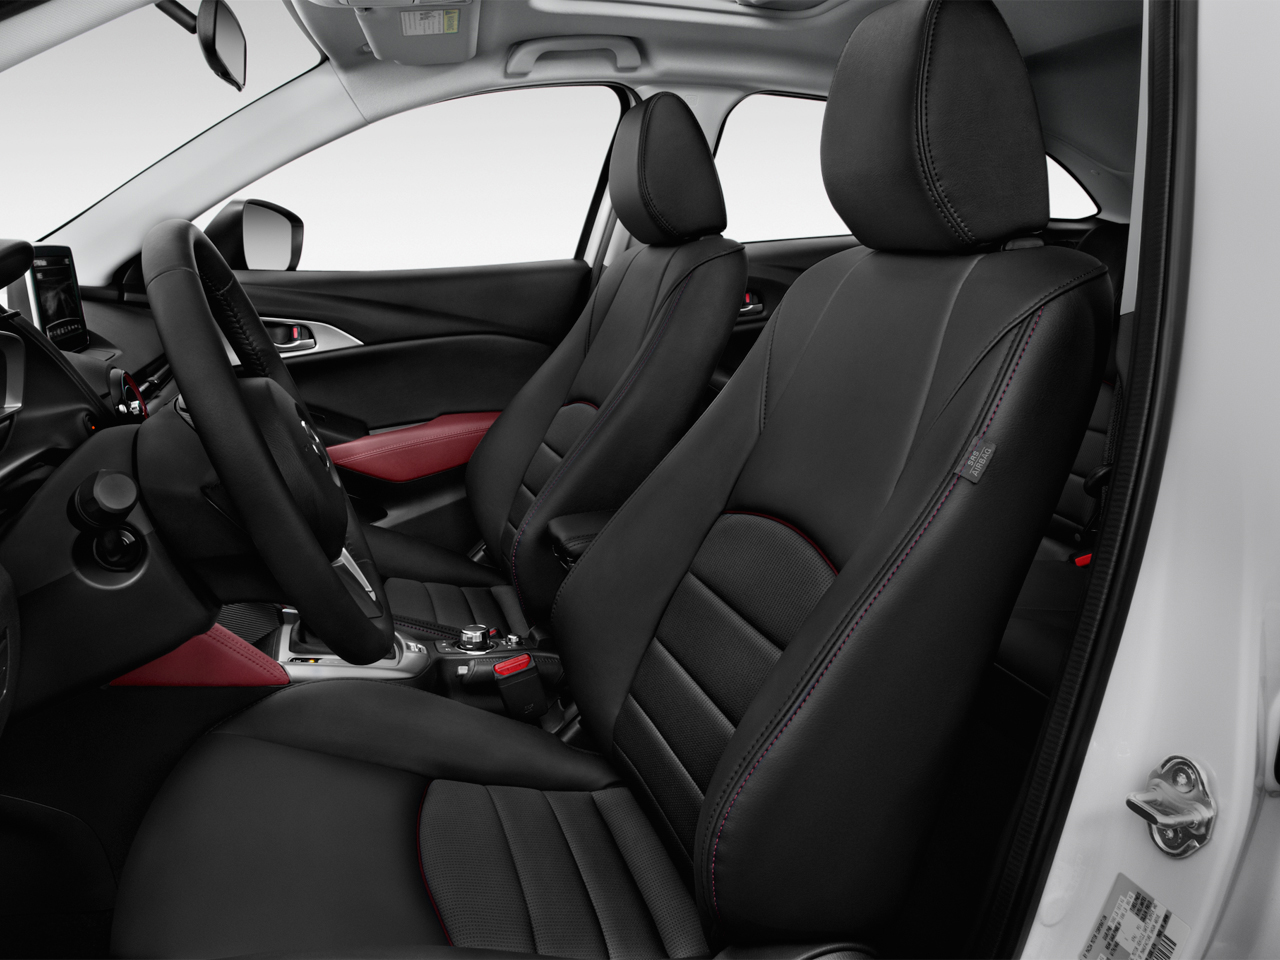 Mazda Mazda3 s Gran Touring interior front cross view